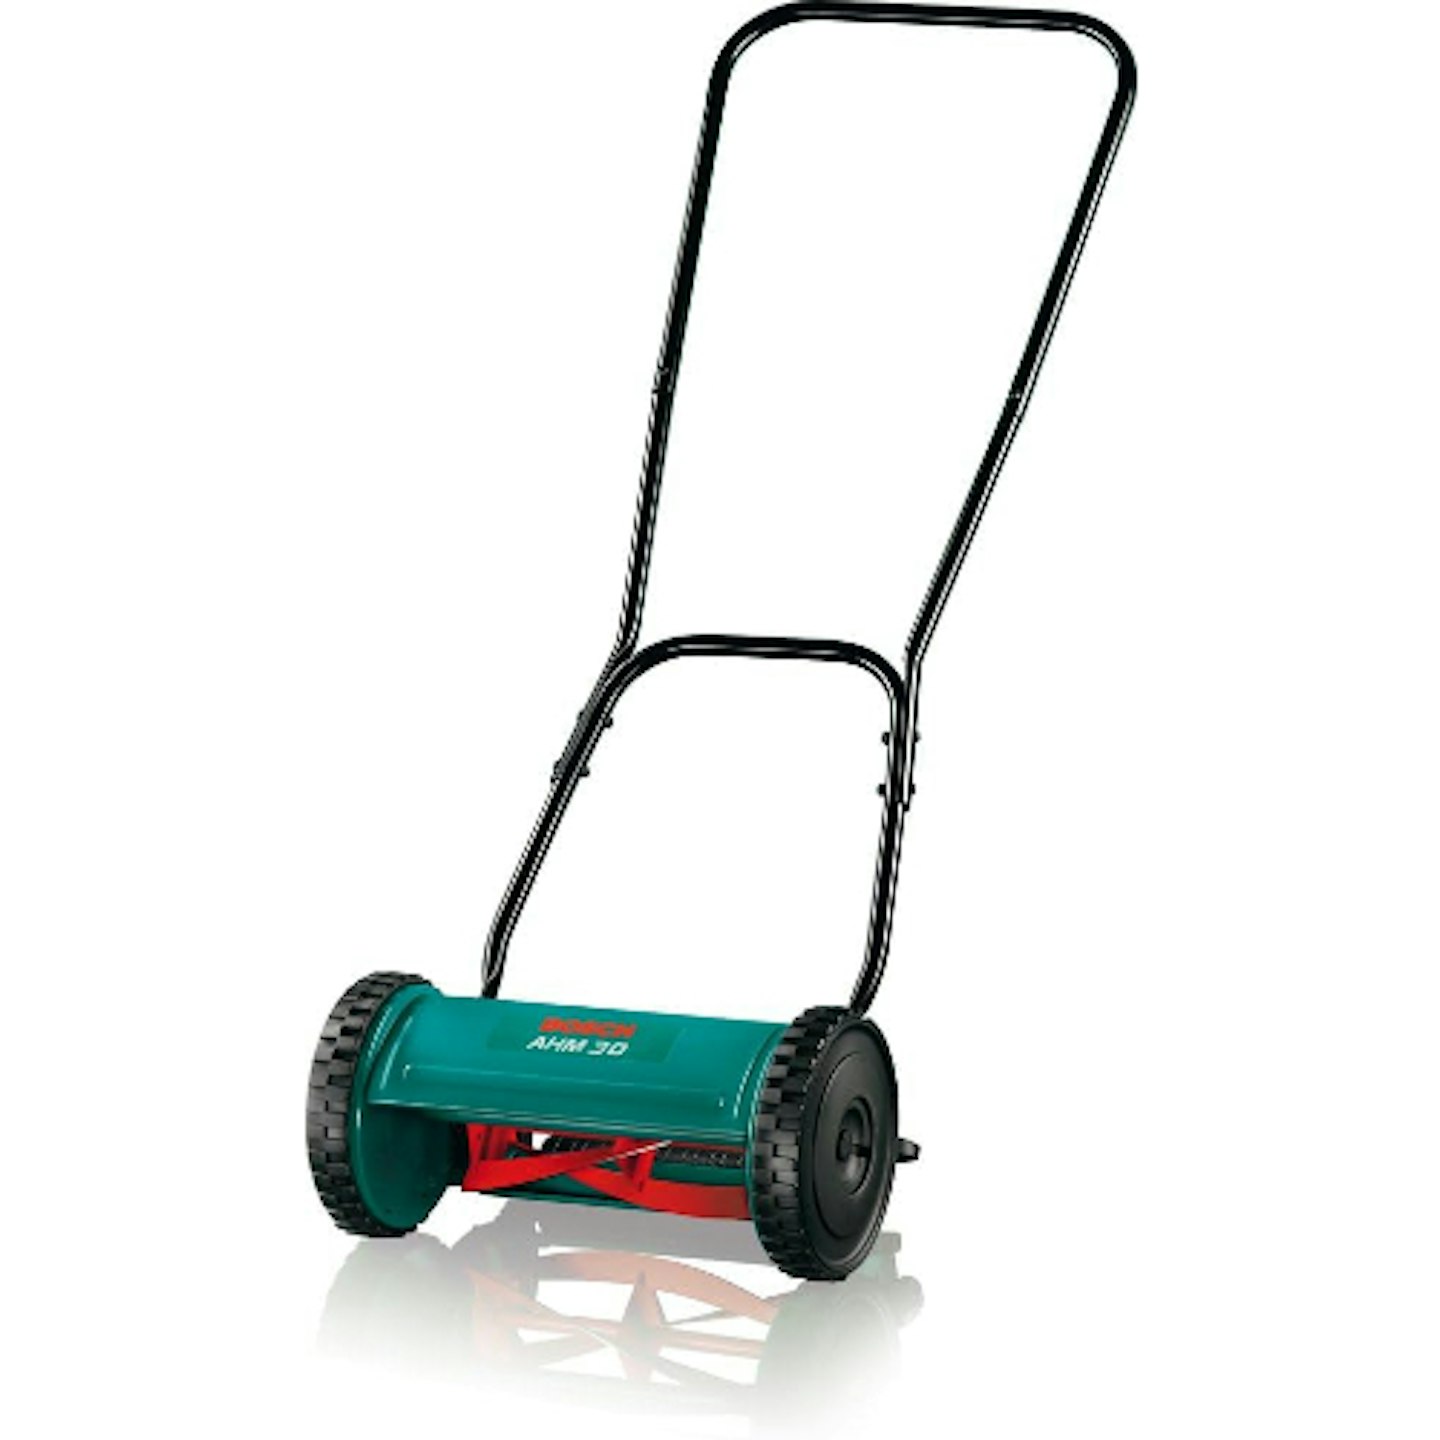 Bosch lawn mower 